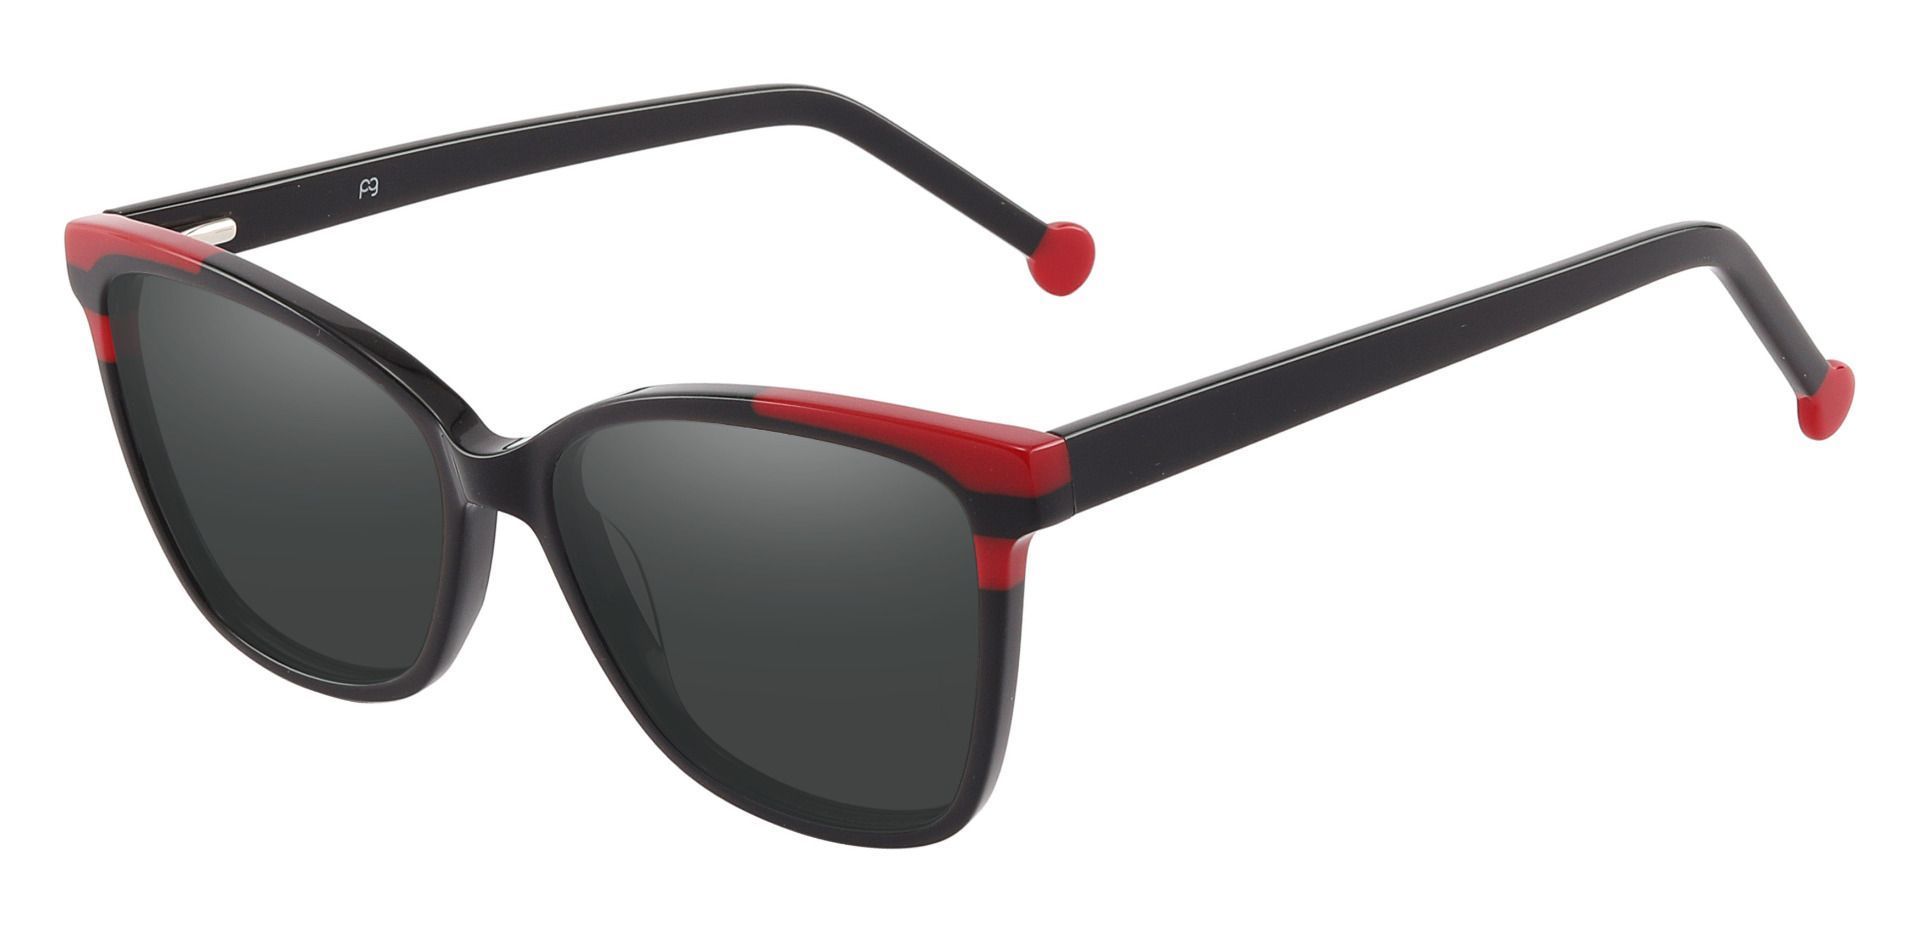 Shania Cat Eye Prescription Sunglasses - Black Frame With Gray Lenses